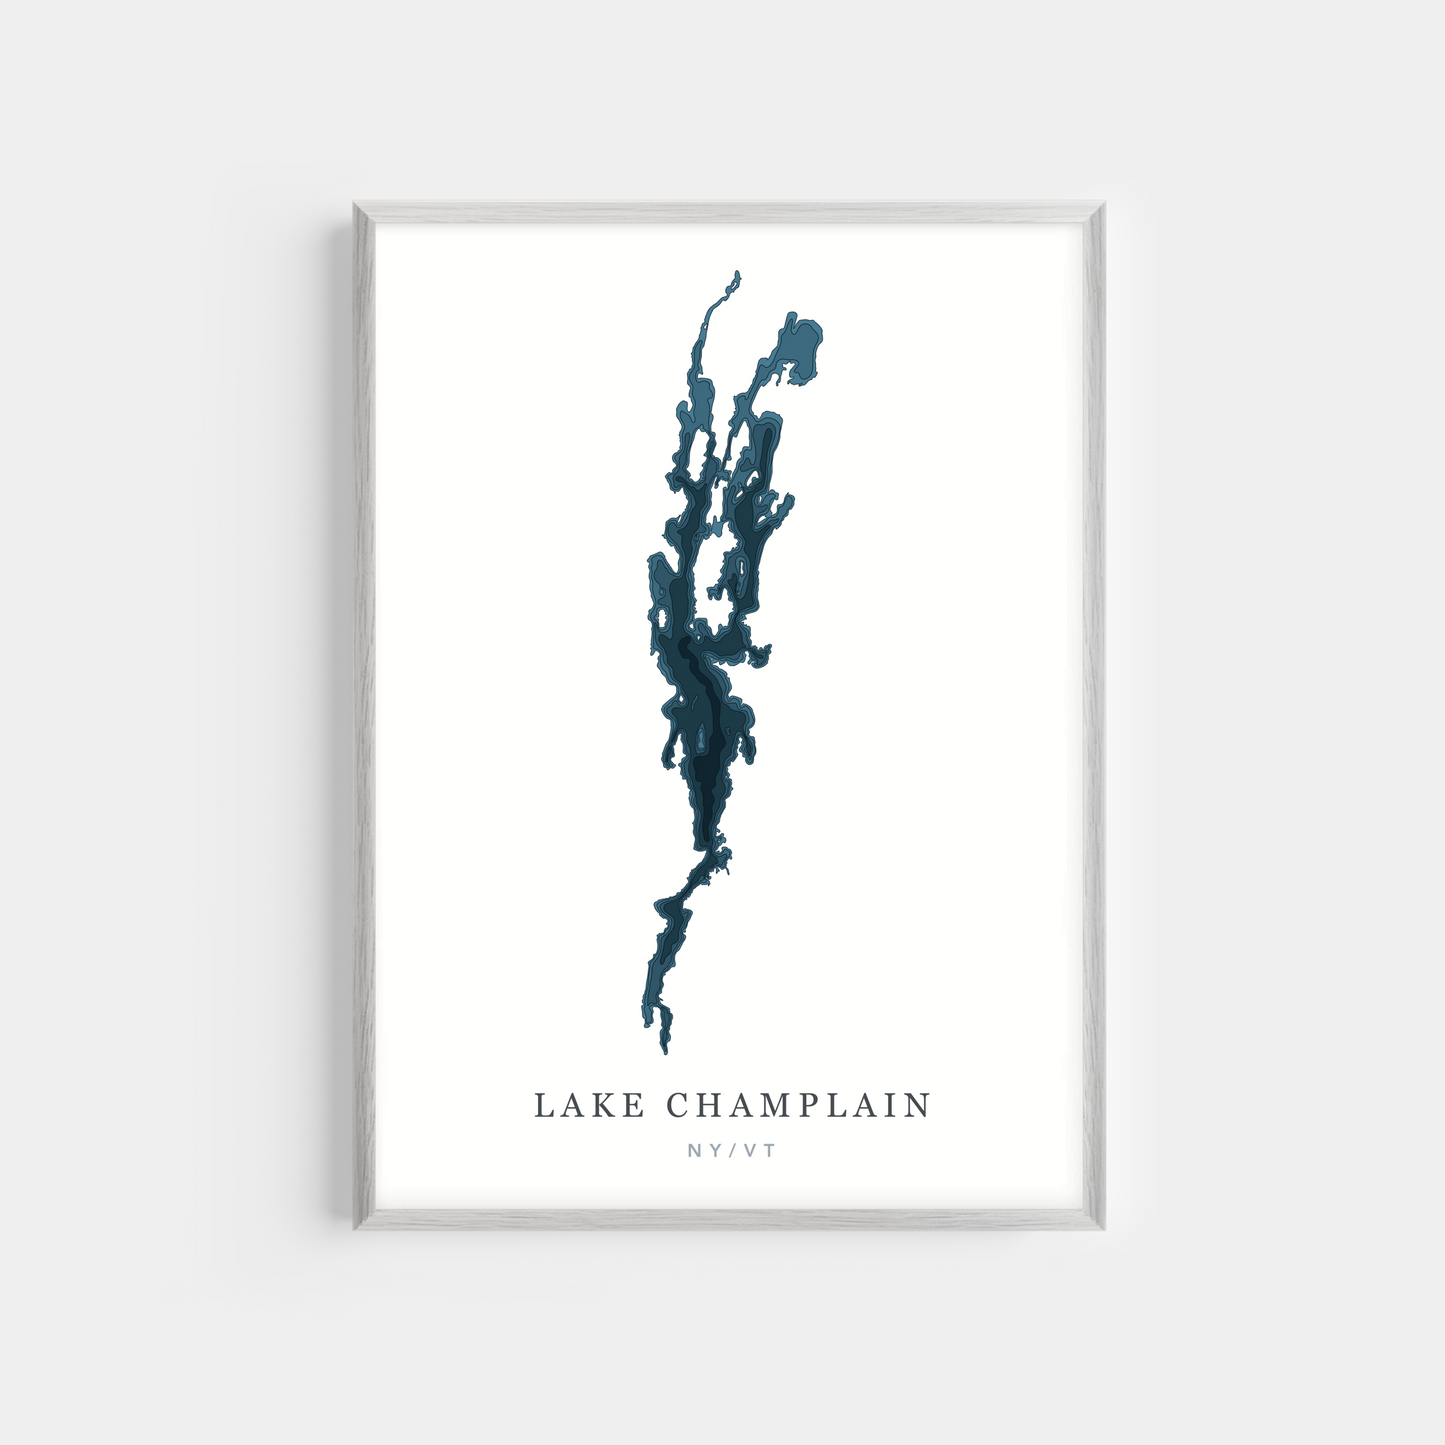 Lake Champlain, NY/VT | Photo Print